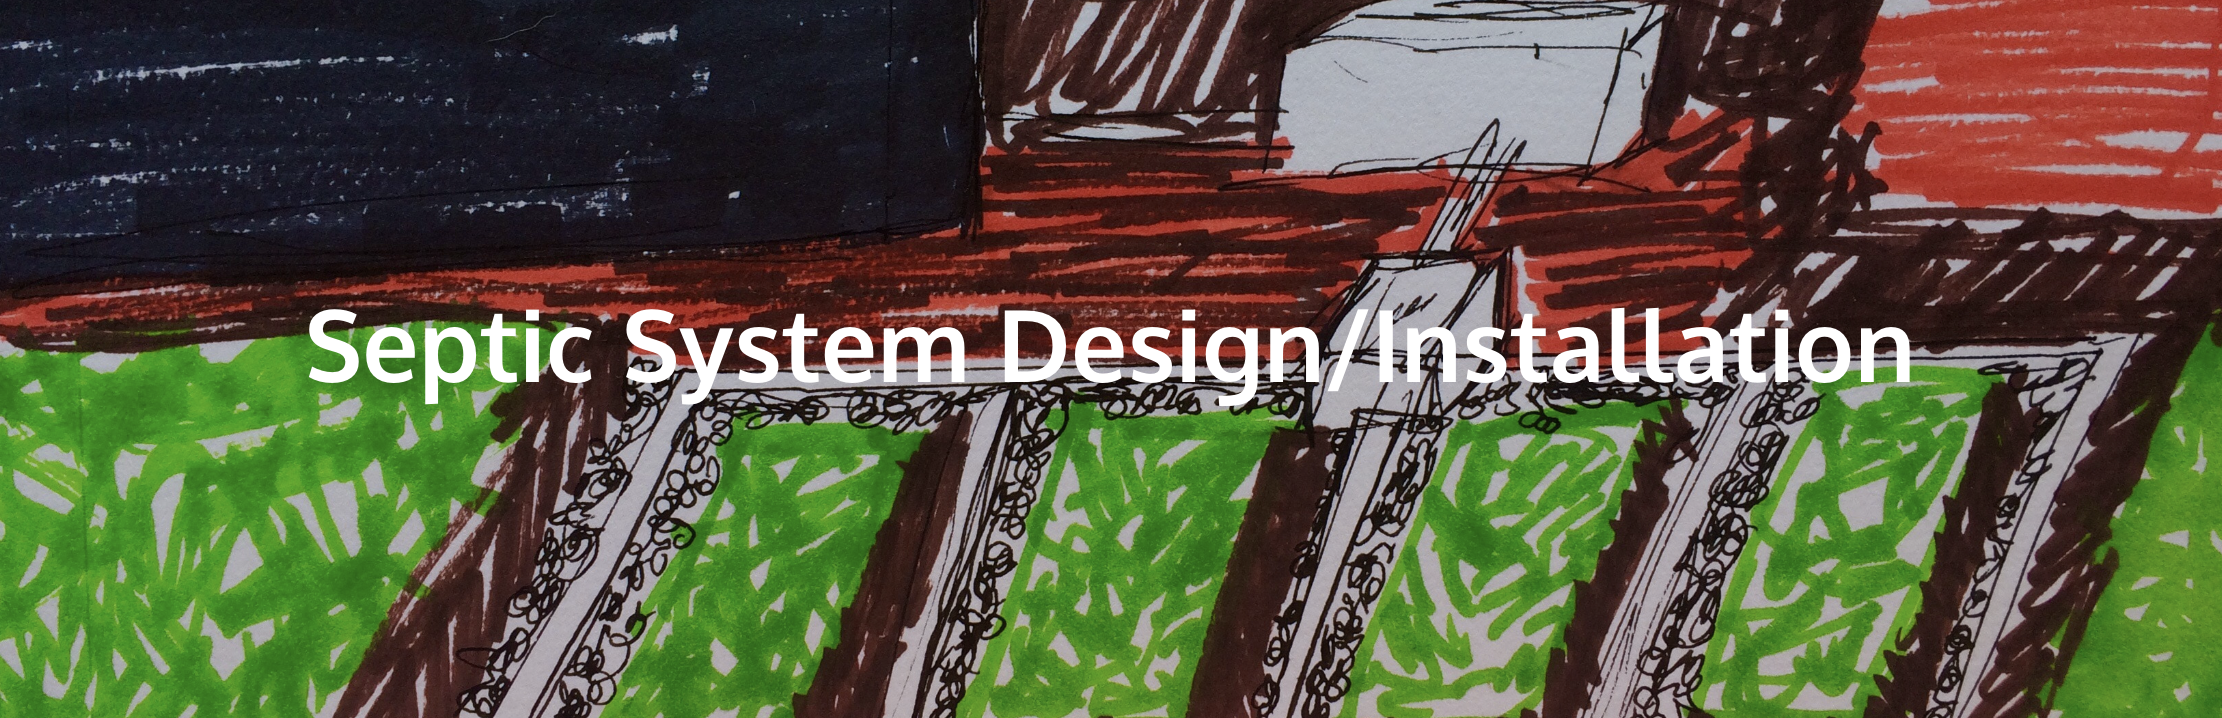 Septic System Design / Installation